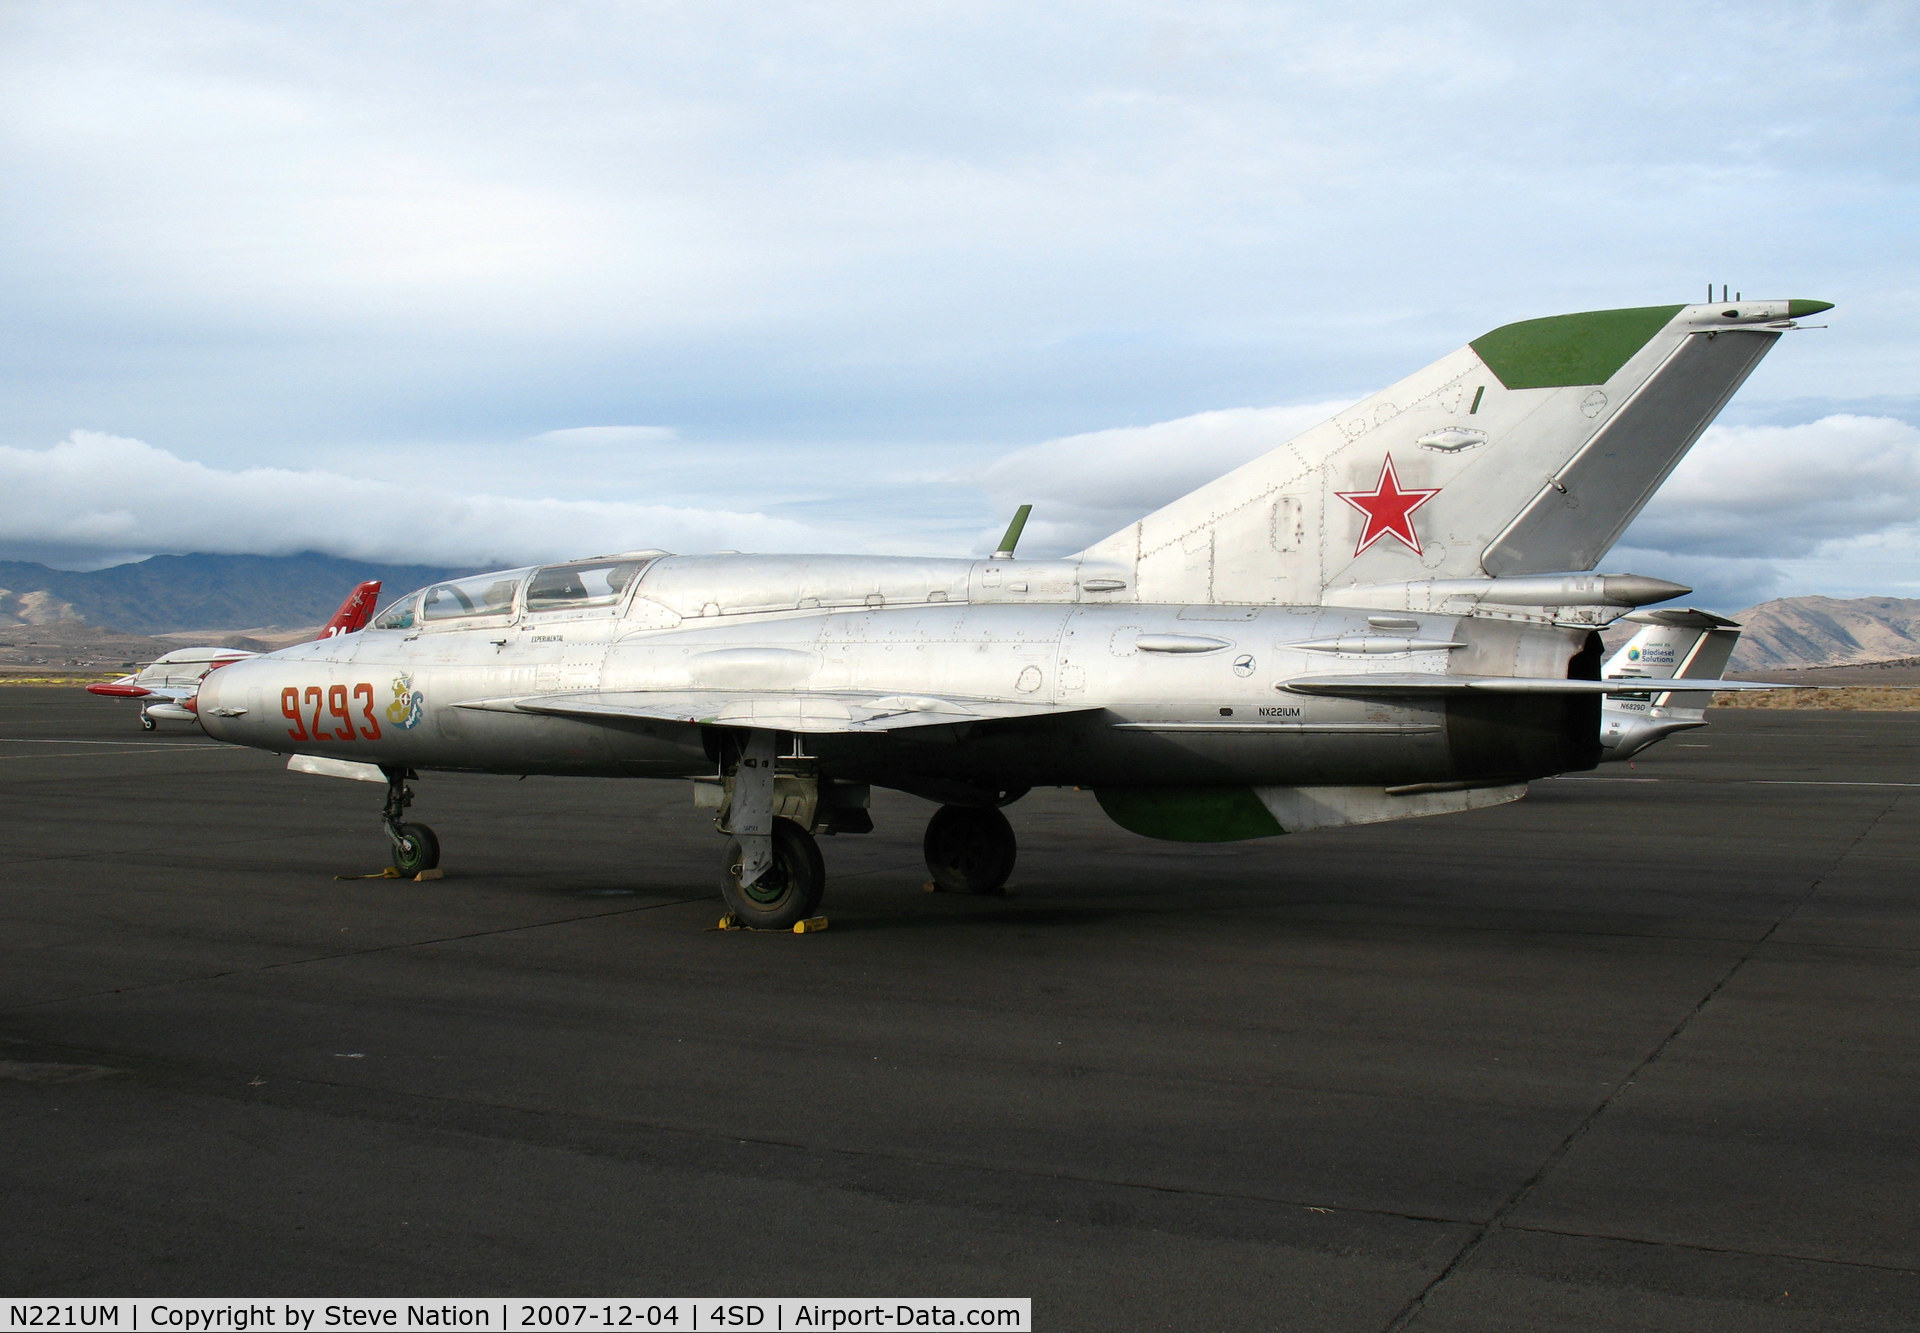 N221UM, 1983 Mikoyan-Gurevich MiG-21UM C/N 516999293, 1983 Mikoyan Gurevich MIG 21 UM #9293 as NX221UM @ Reno-Stead